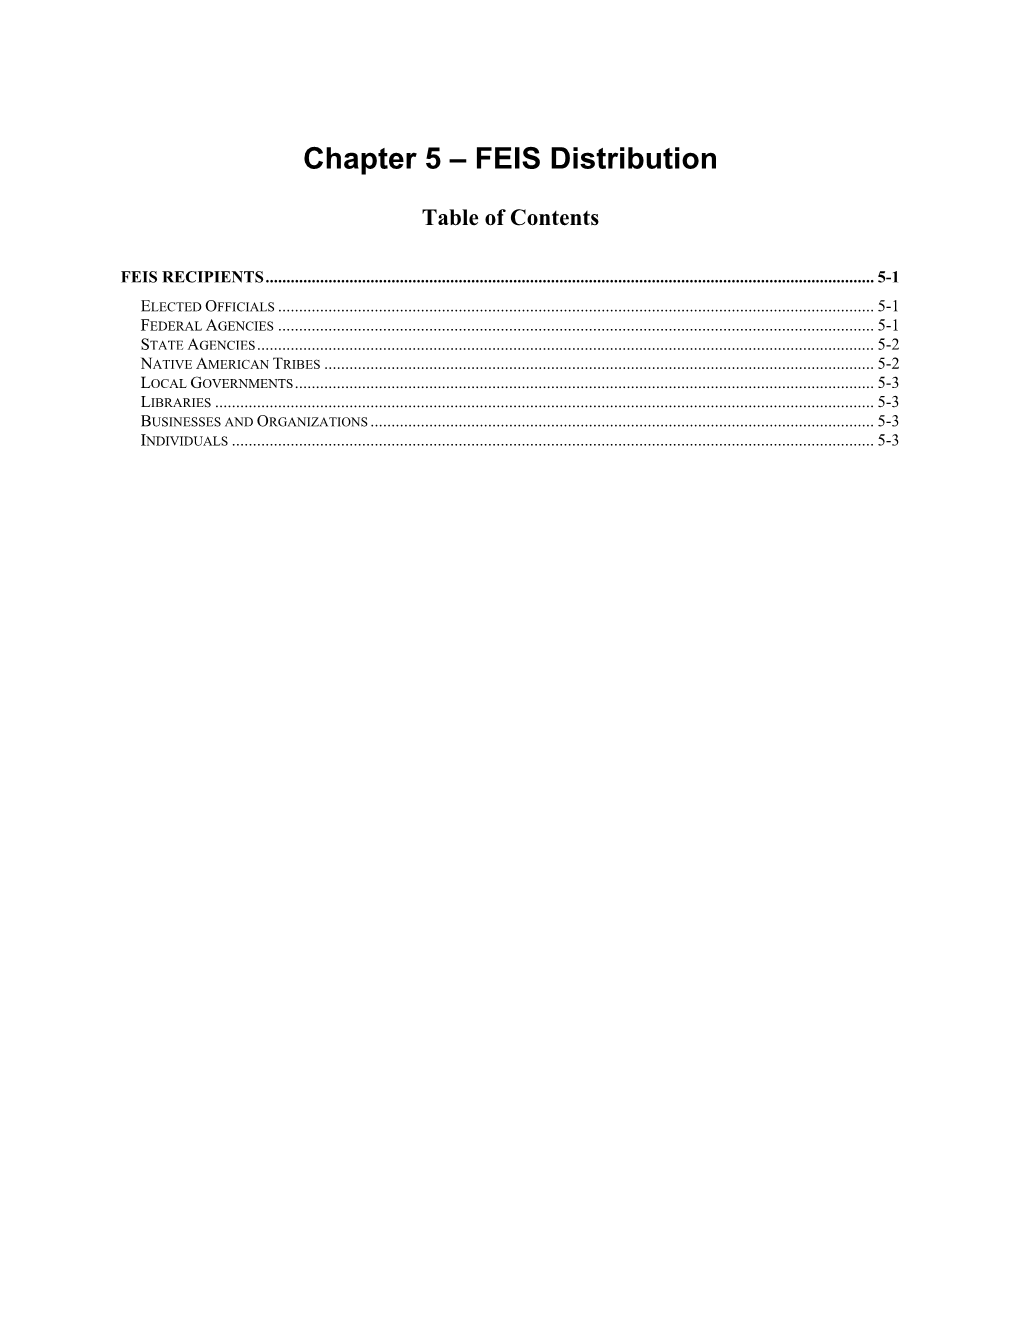 Chapter 5, Final Environmental Impact Statement Distribution